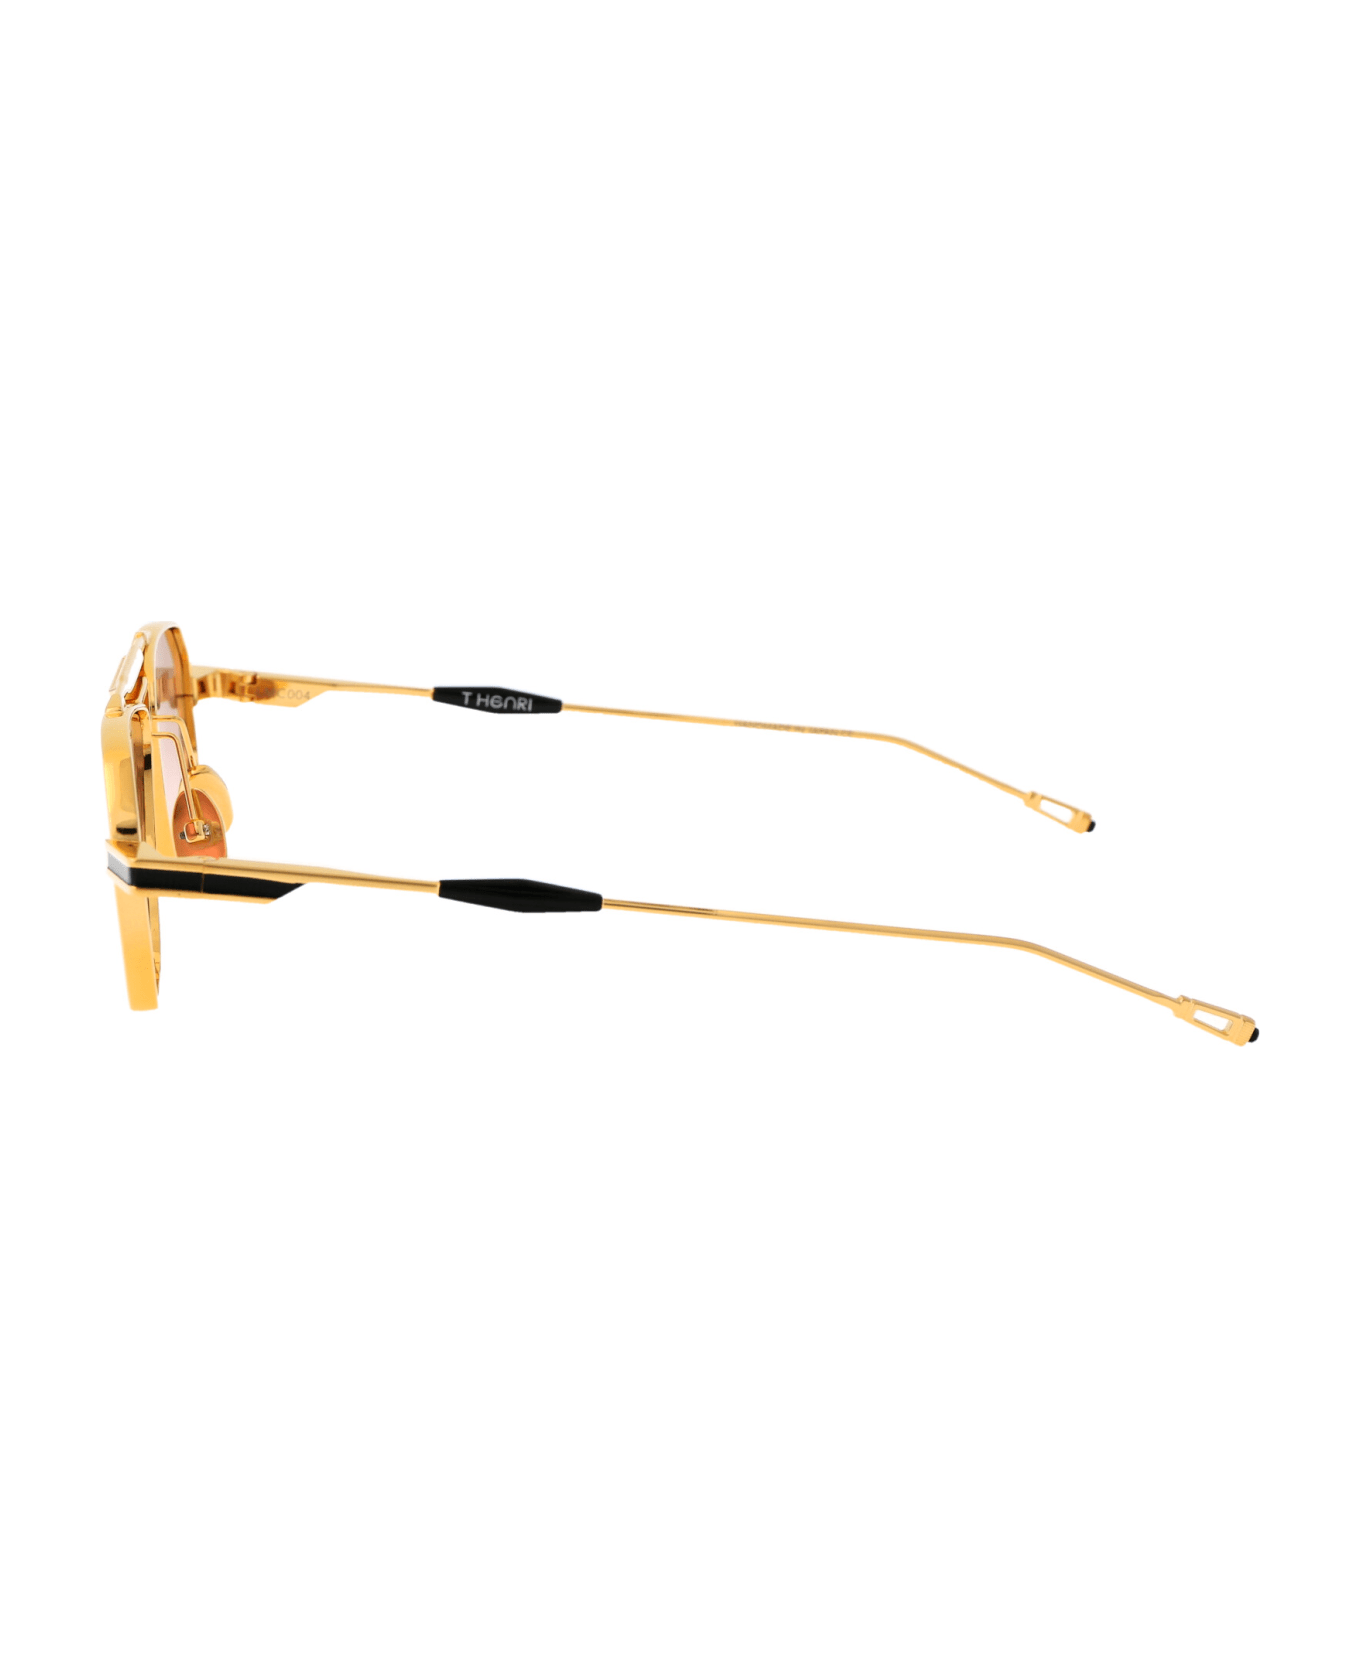 T Henri Longtail Sunglasses - CASINO ROYALE サングラス